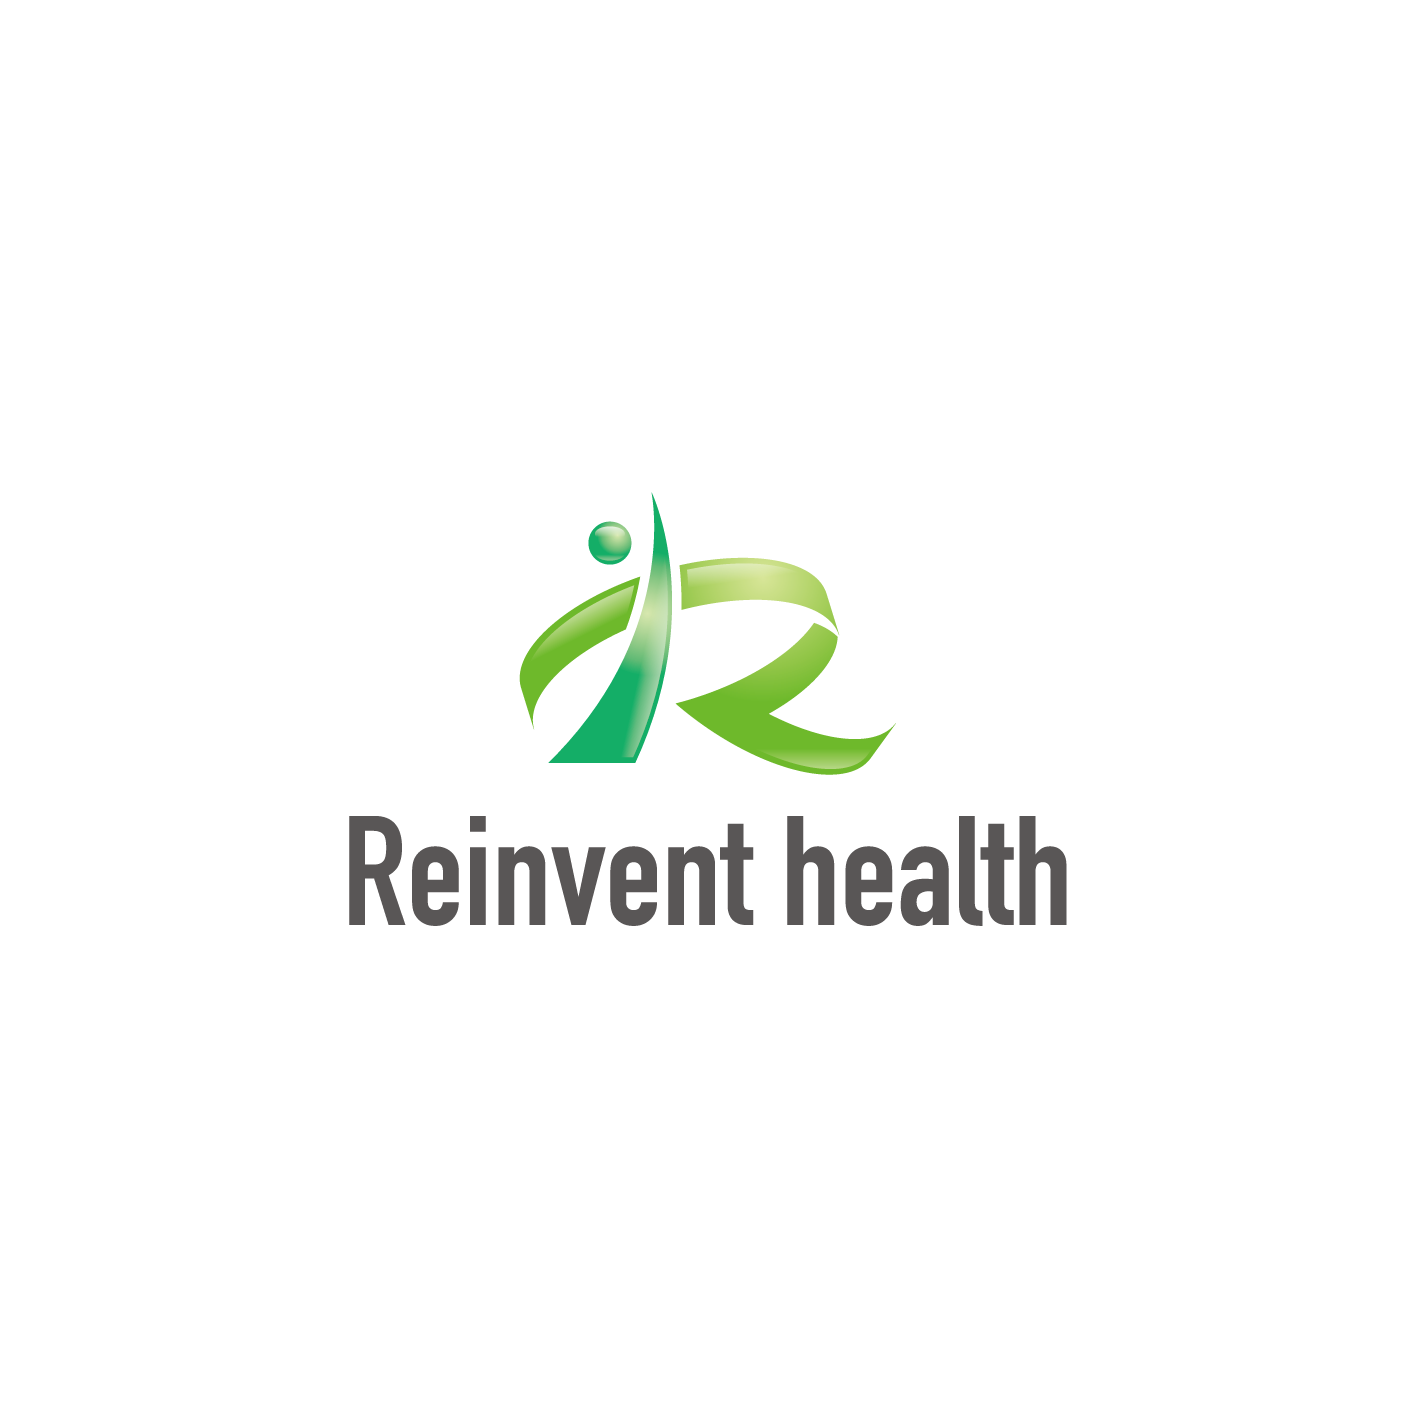 Reinvent health 株式会社